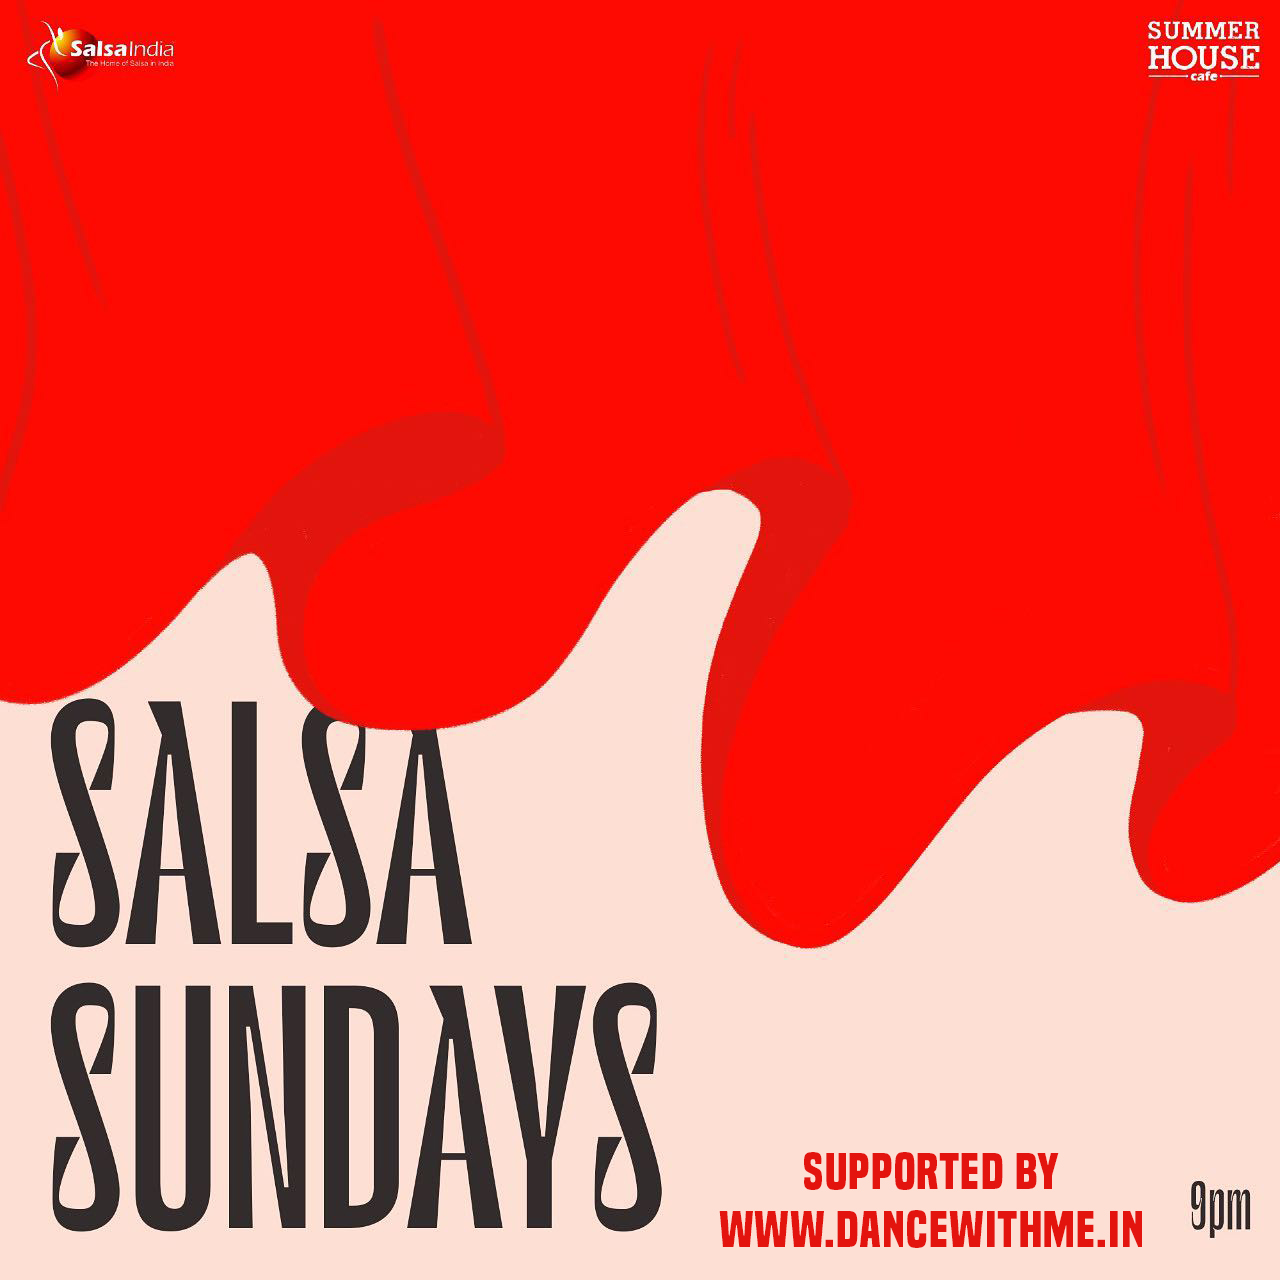 Sundays Salsa Bachata Kizomba Social Night at Summer House Delhi by Salsa India - Dance With Me India